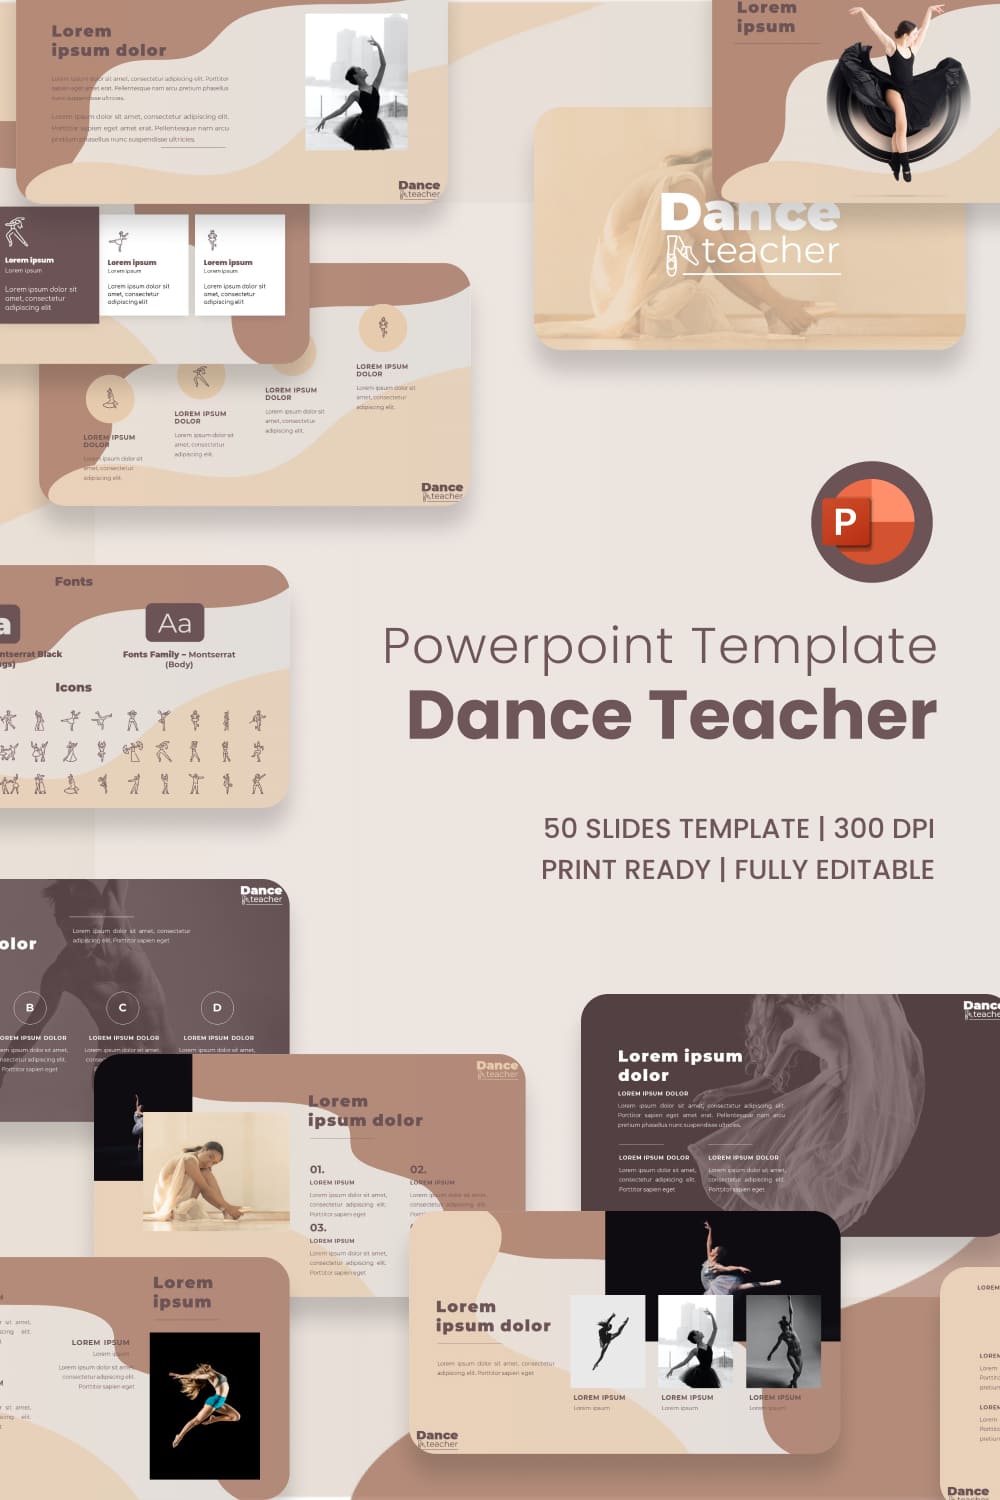 Dance Teacher Template in PPTX.